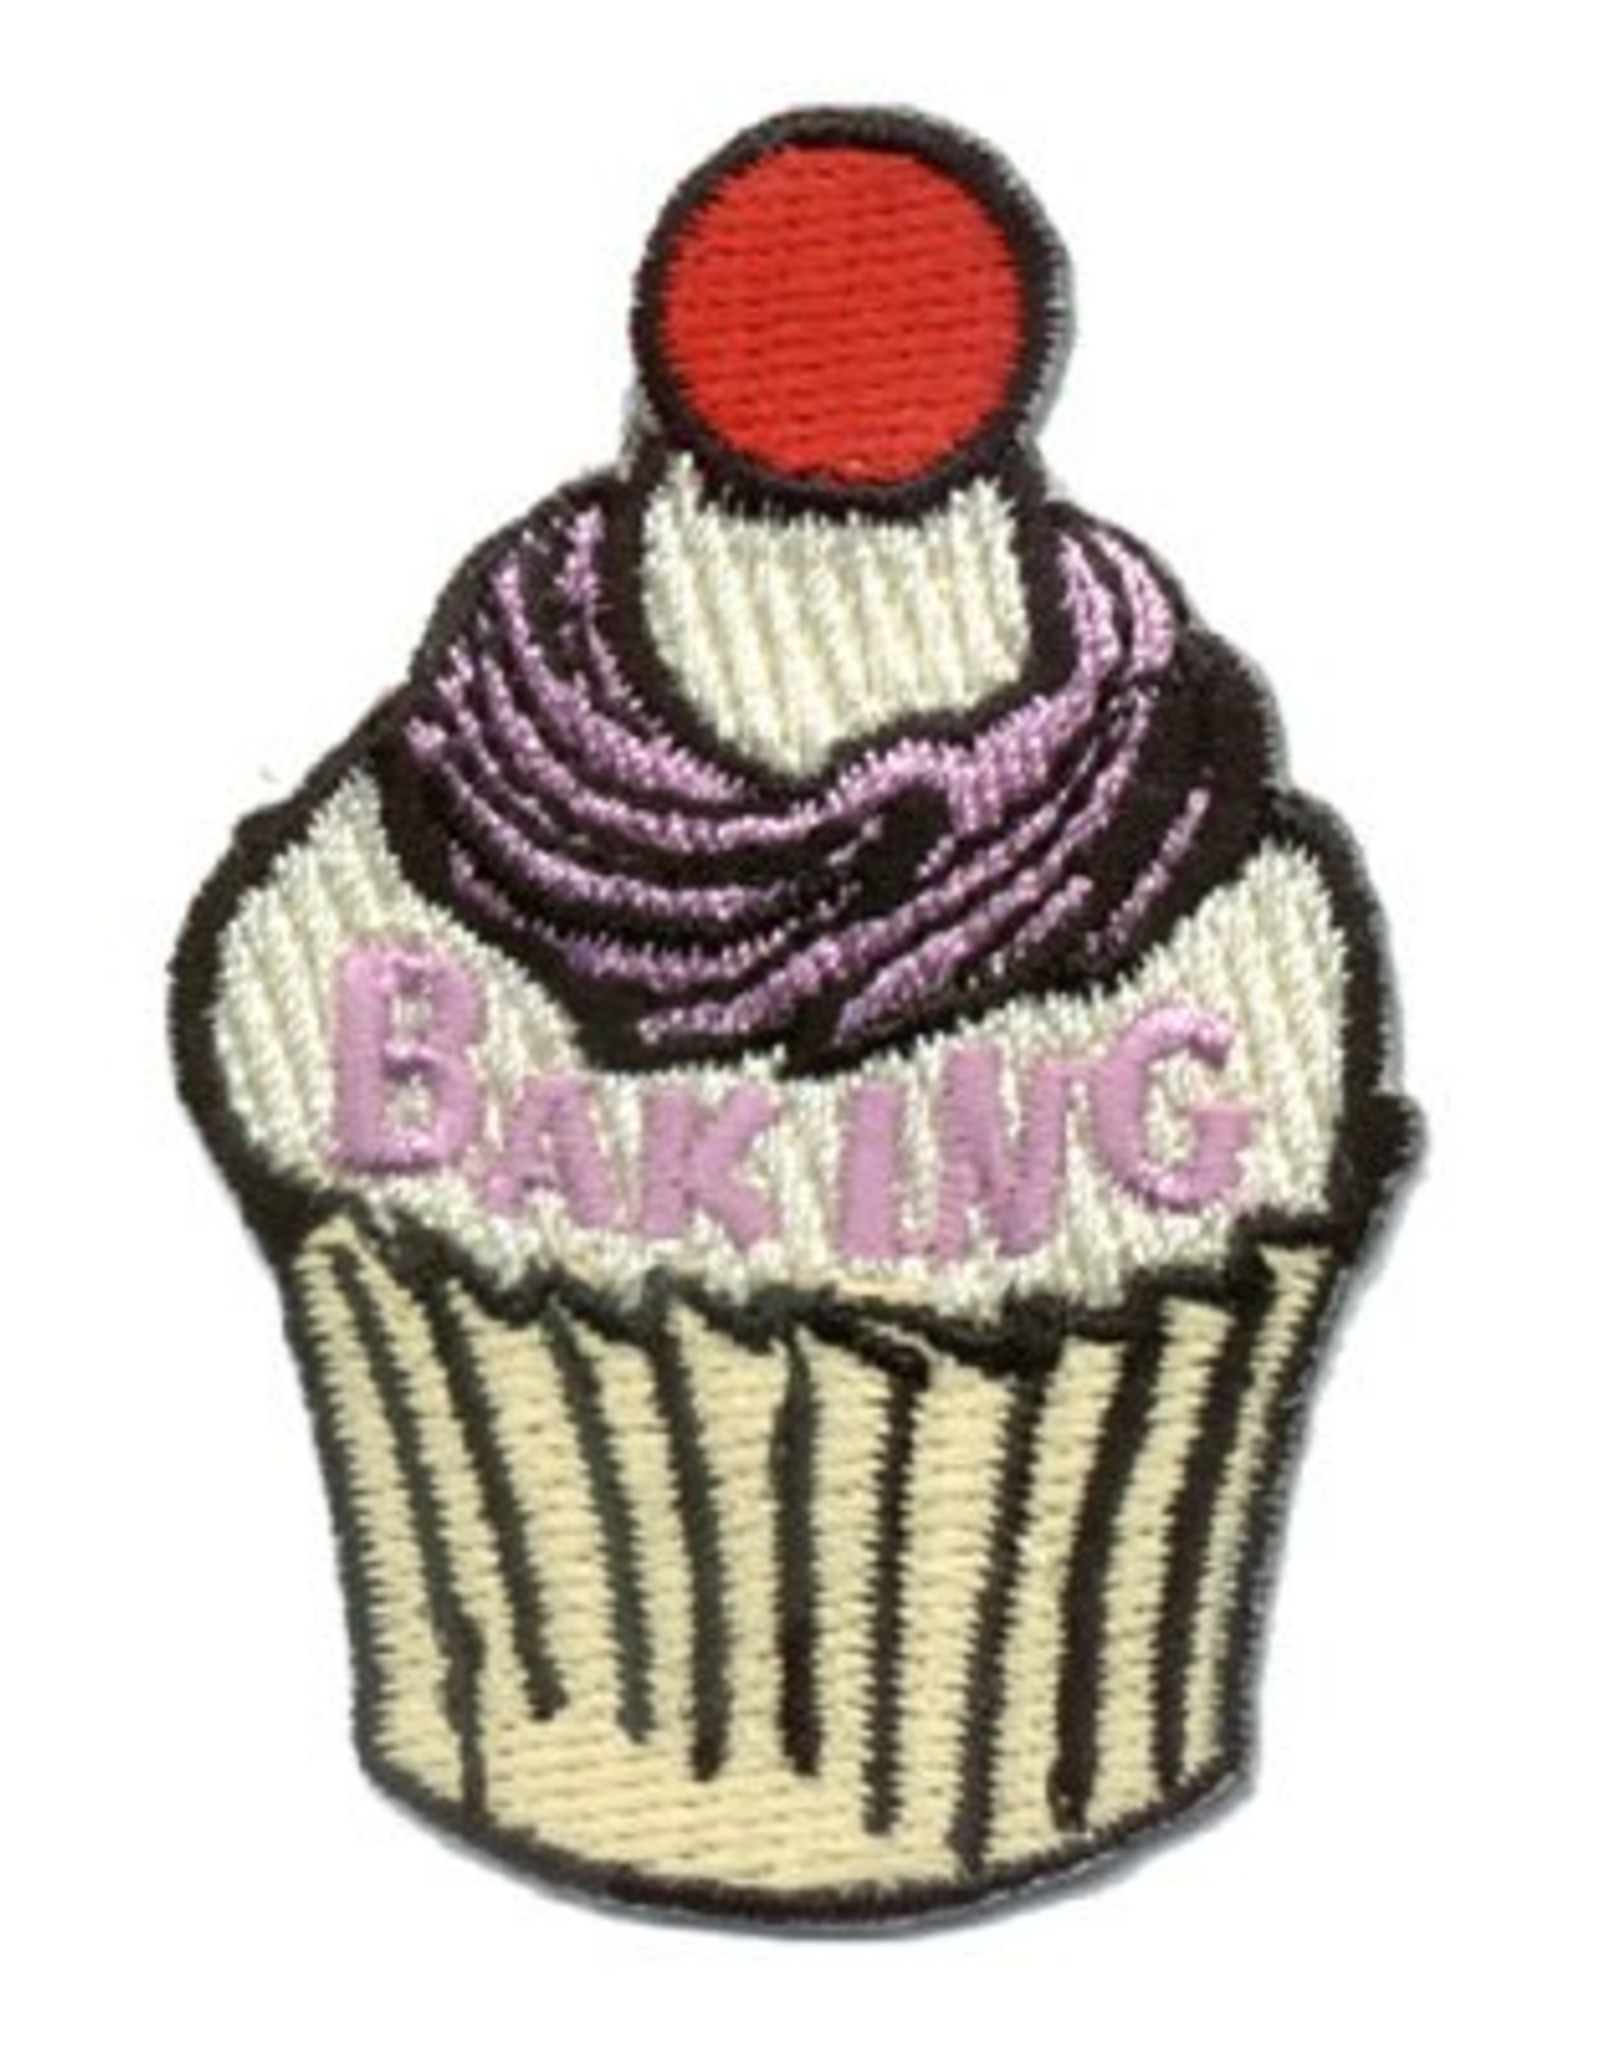 Advantage Emblem & Screen Prnt *Baking Cupcake Fun Patch